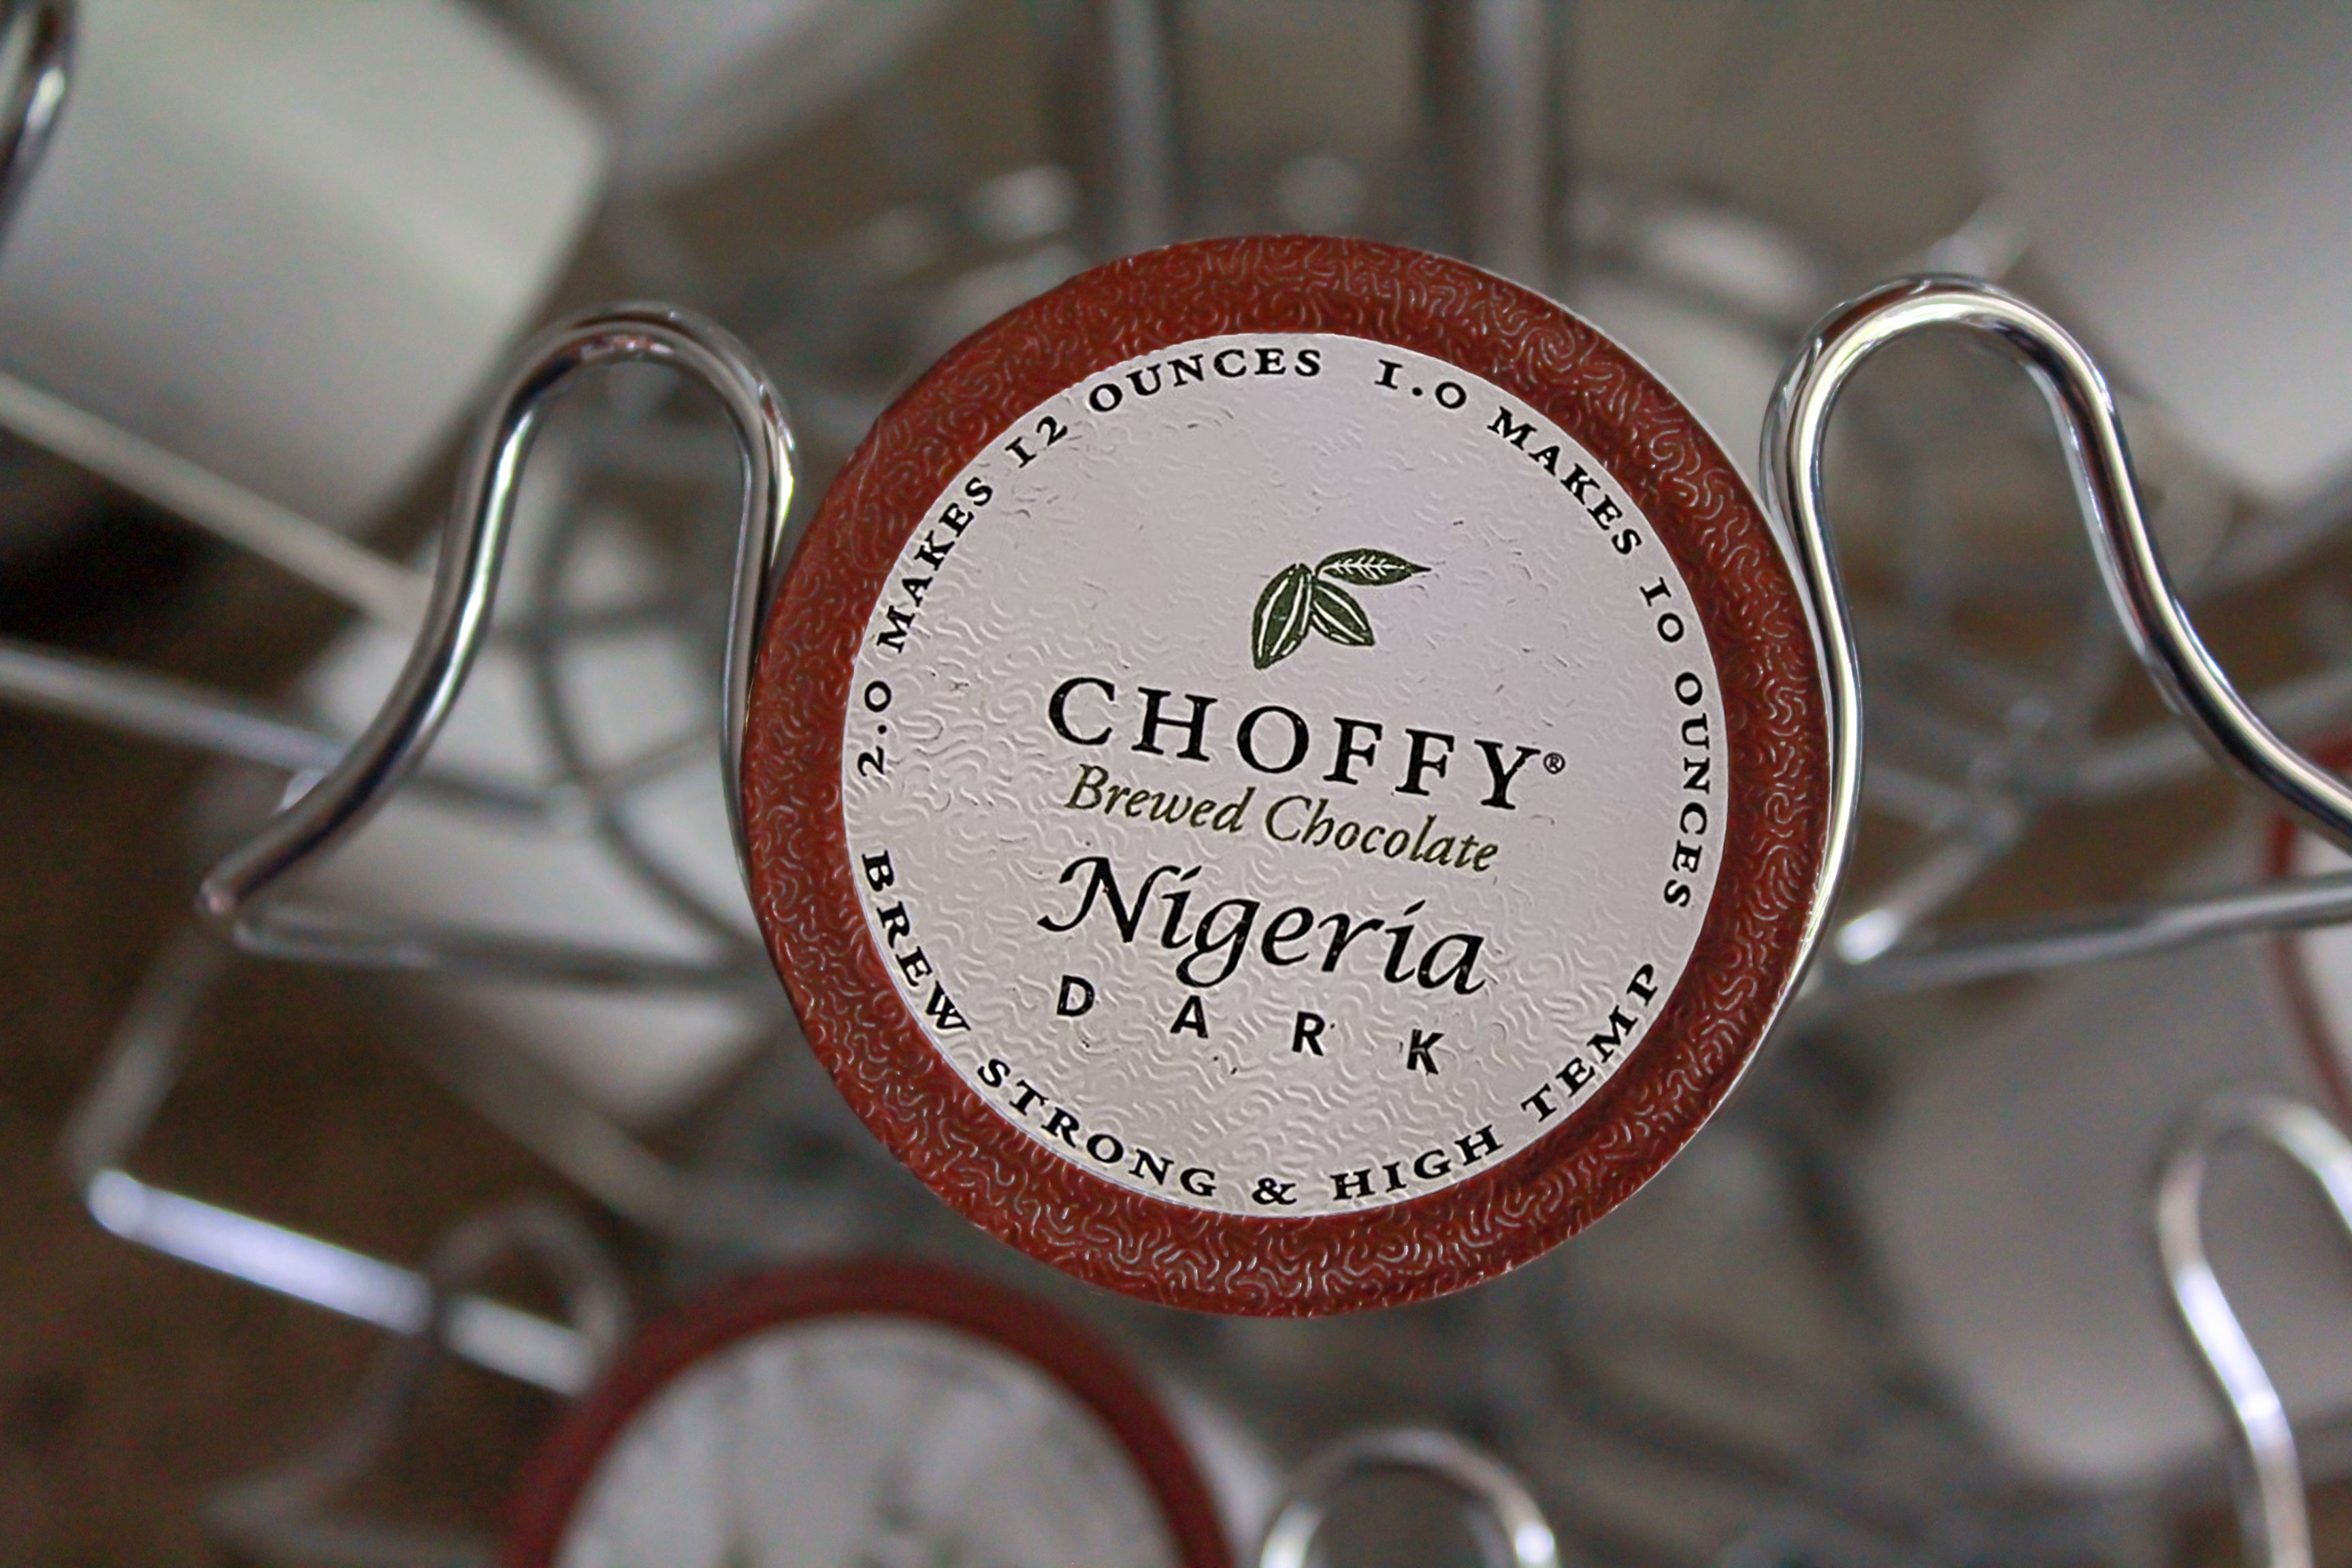 Nigeria Dark Single Serve Choffy Cups